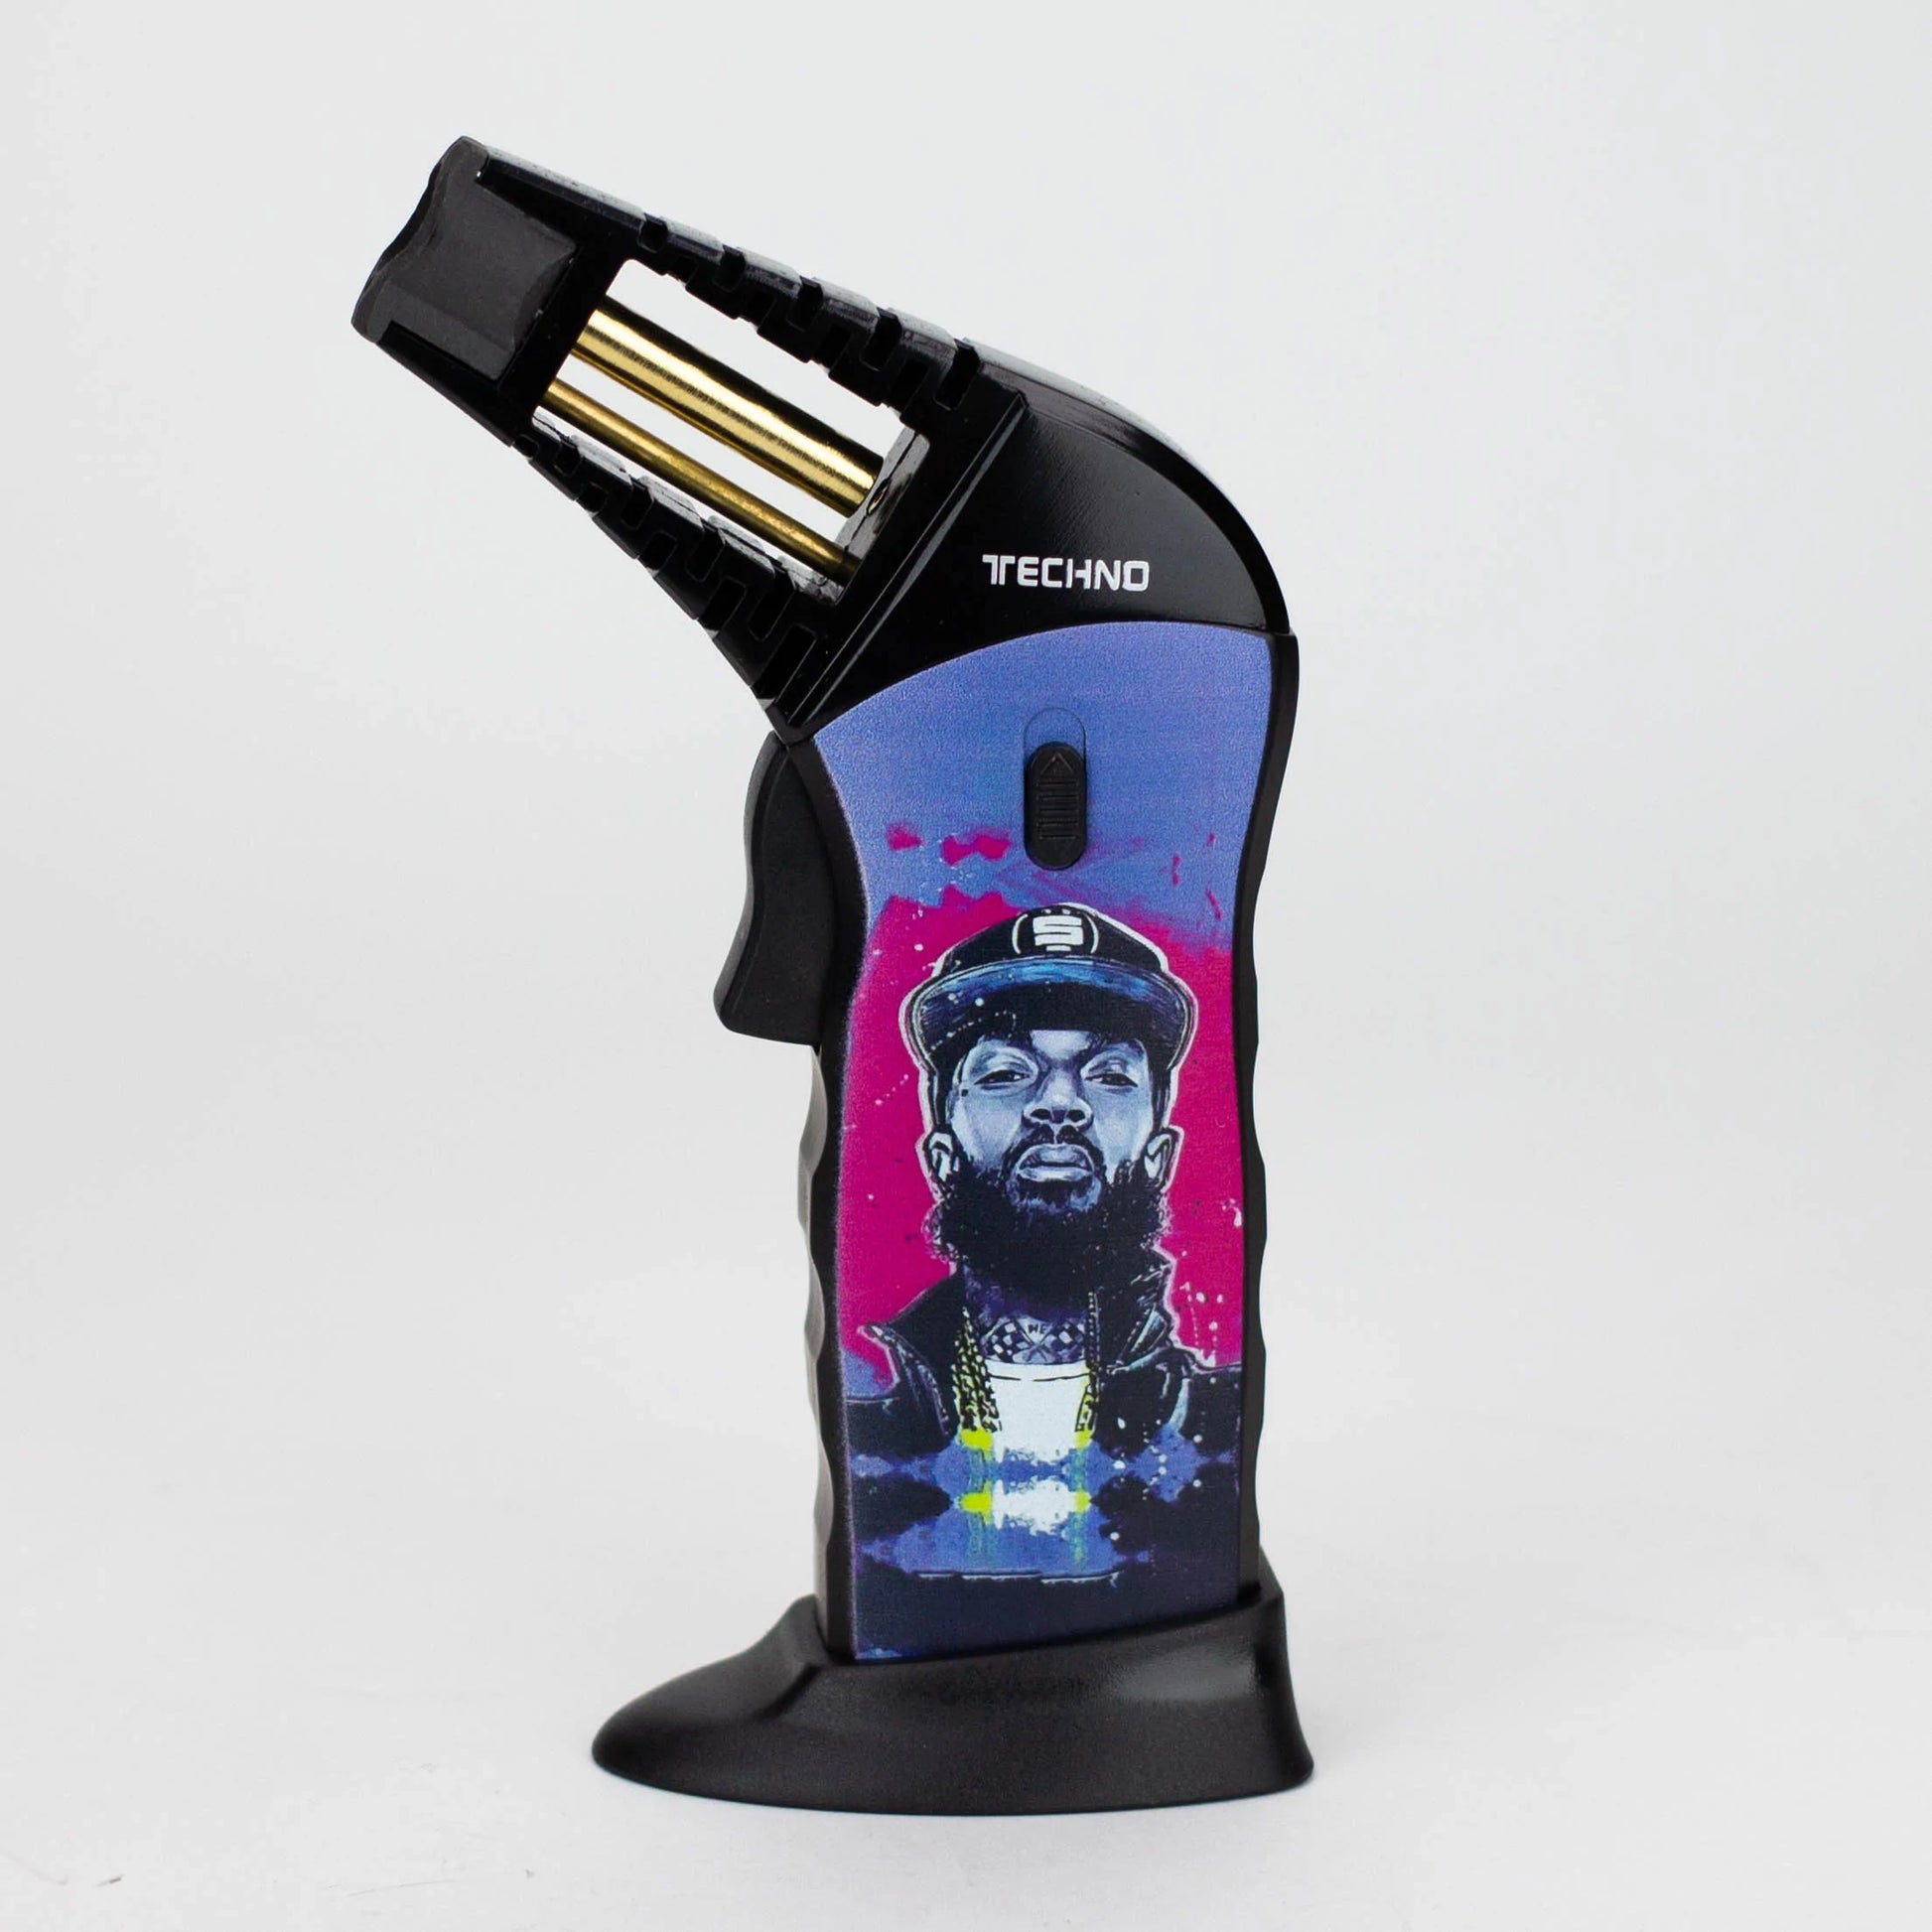 Techno | Adjustable Single Jet slant Torch Lighter in gift box [15811]_6